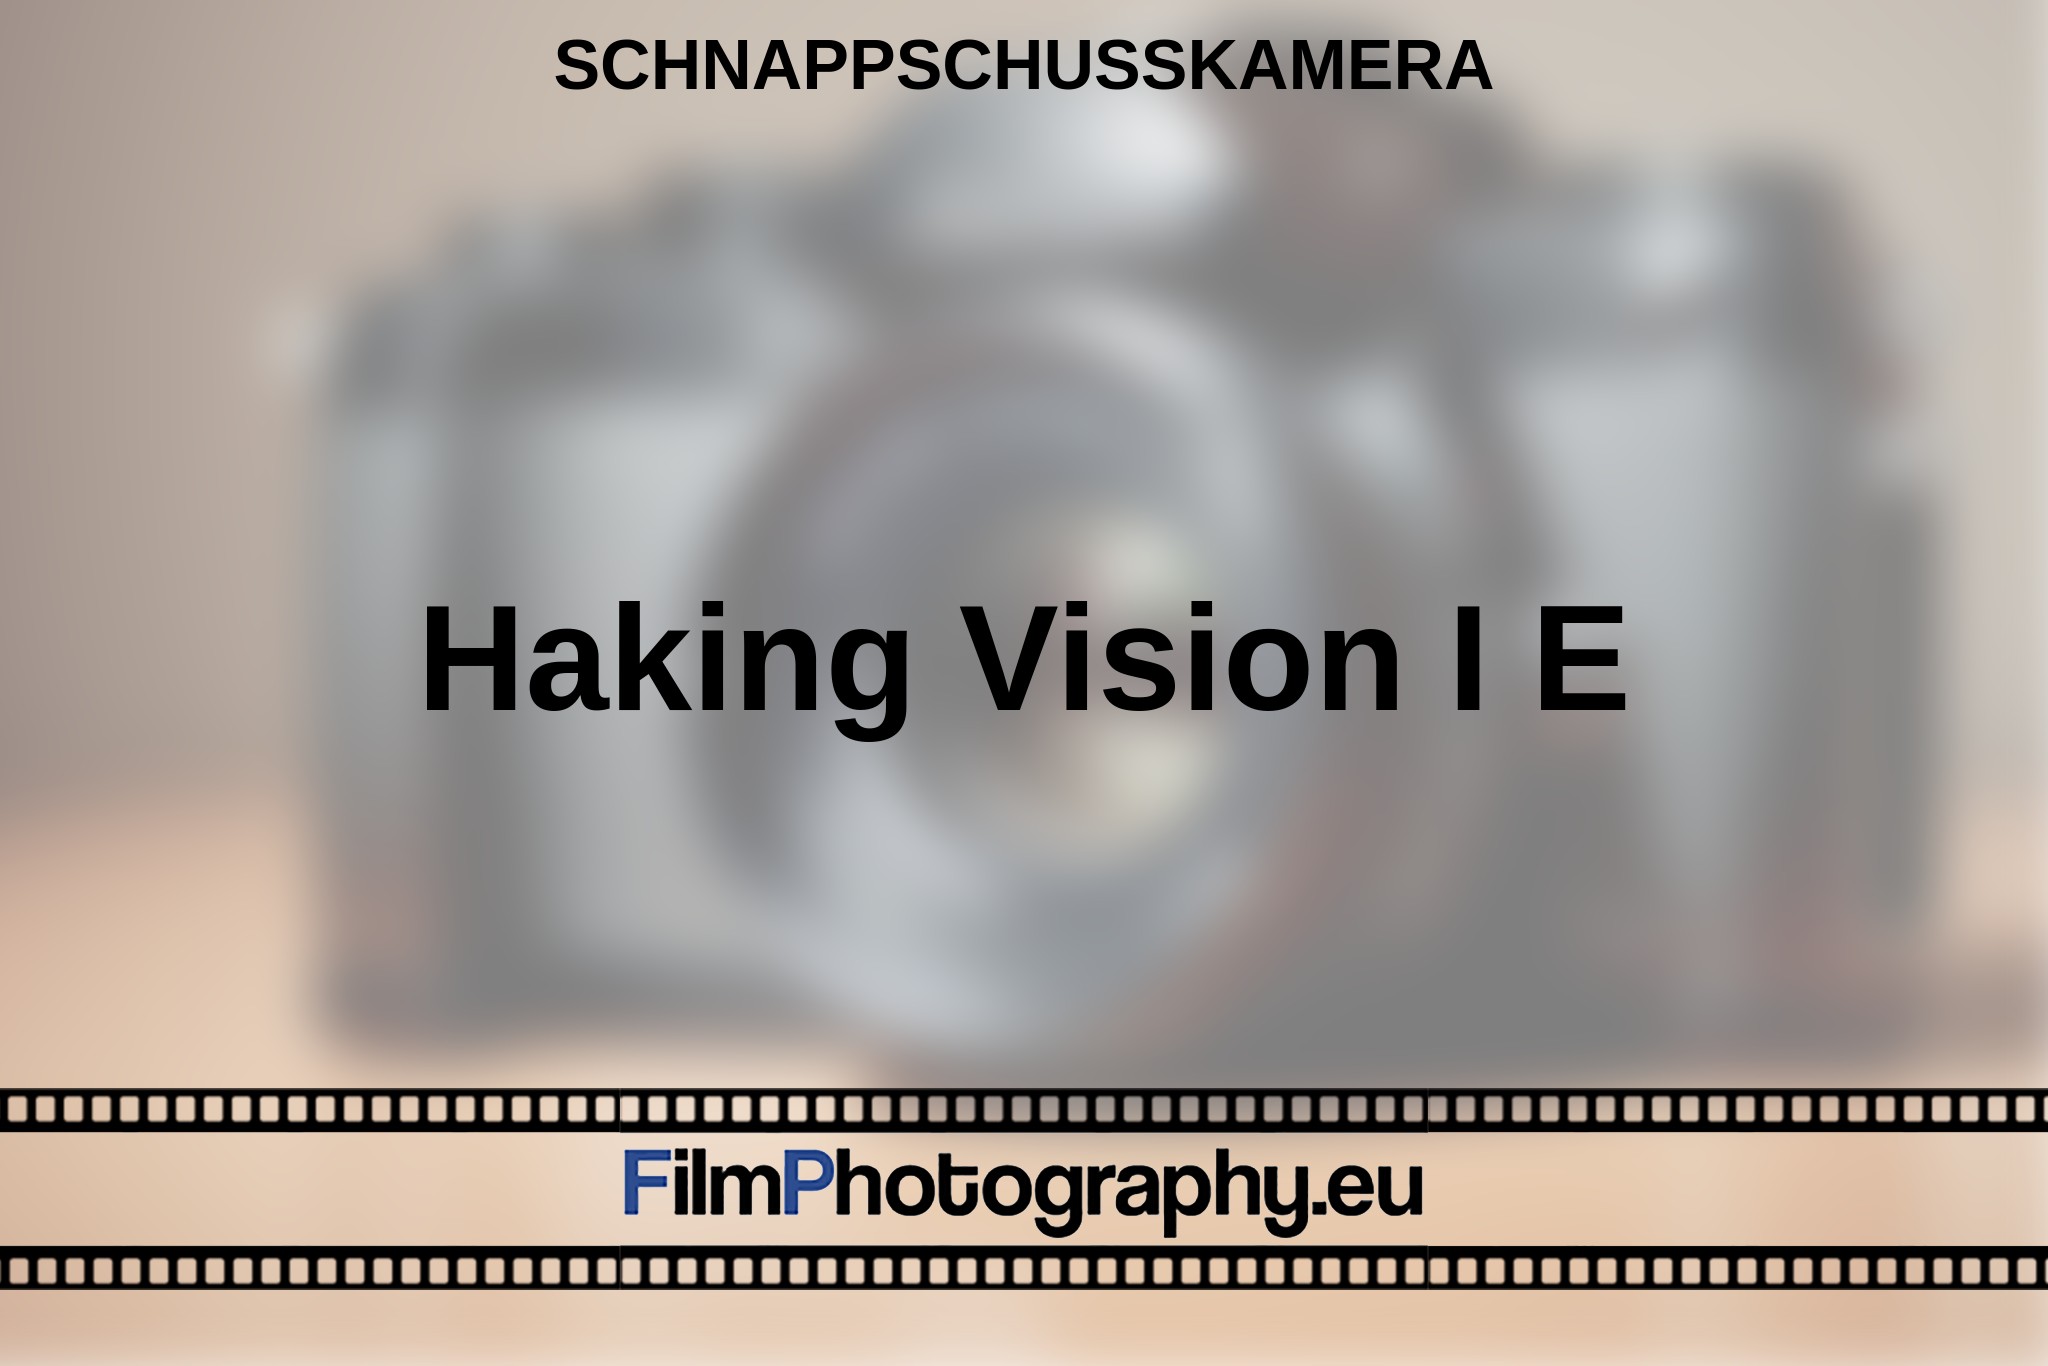 haking-vision-i-e-schnappschusskamera-bnv.jpg